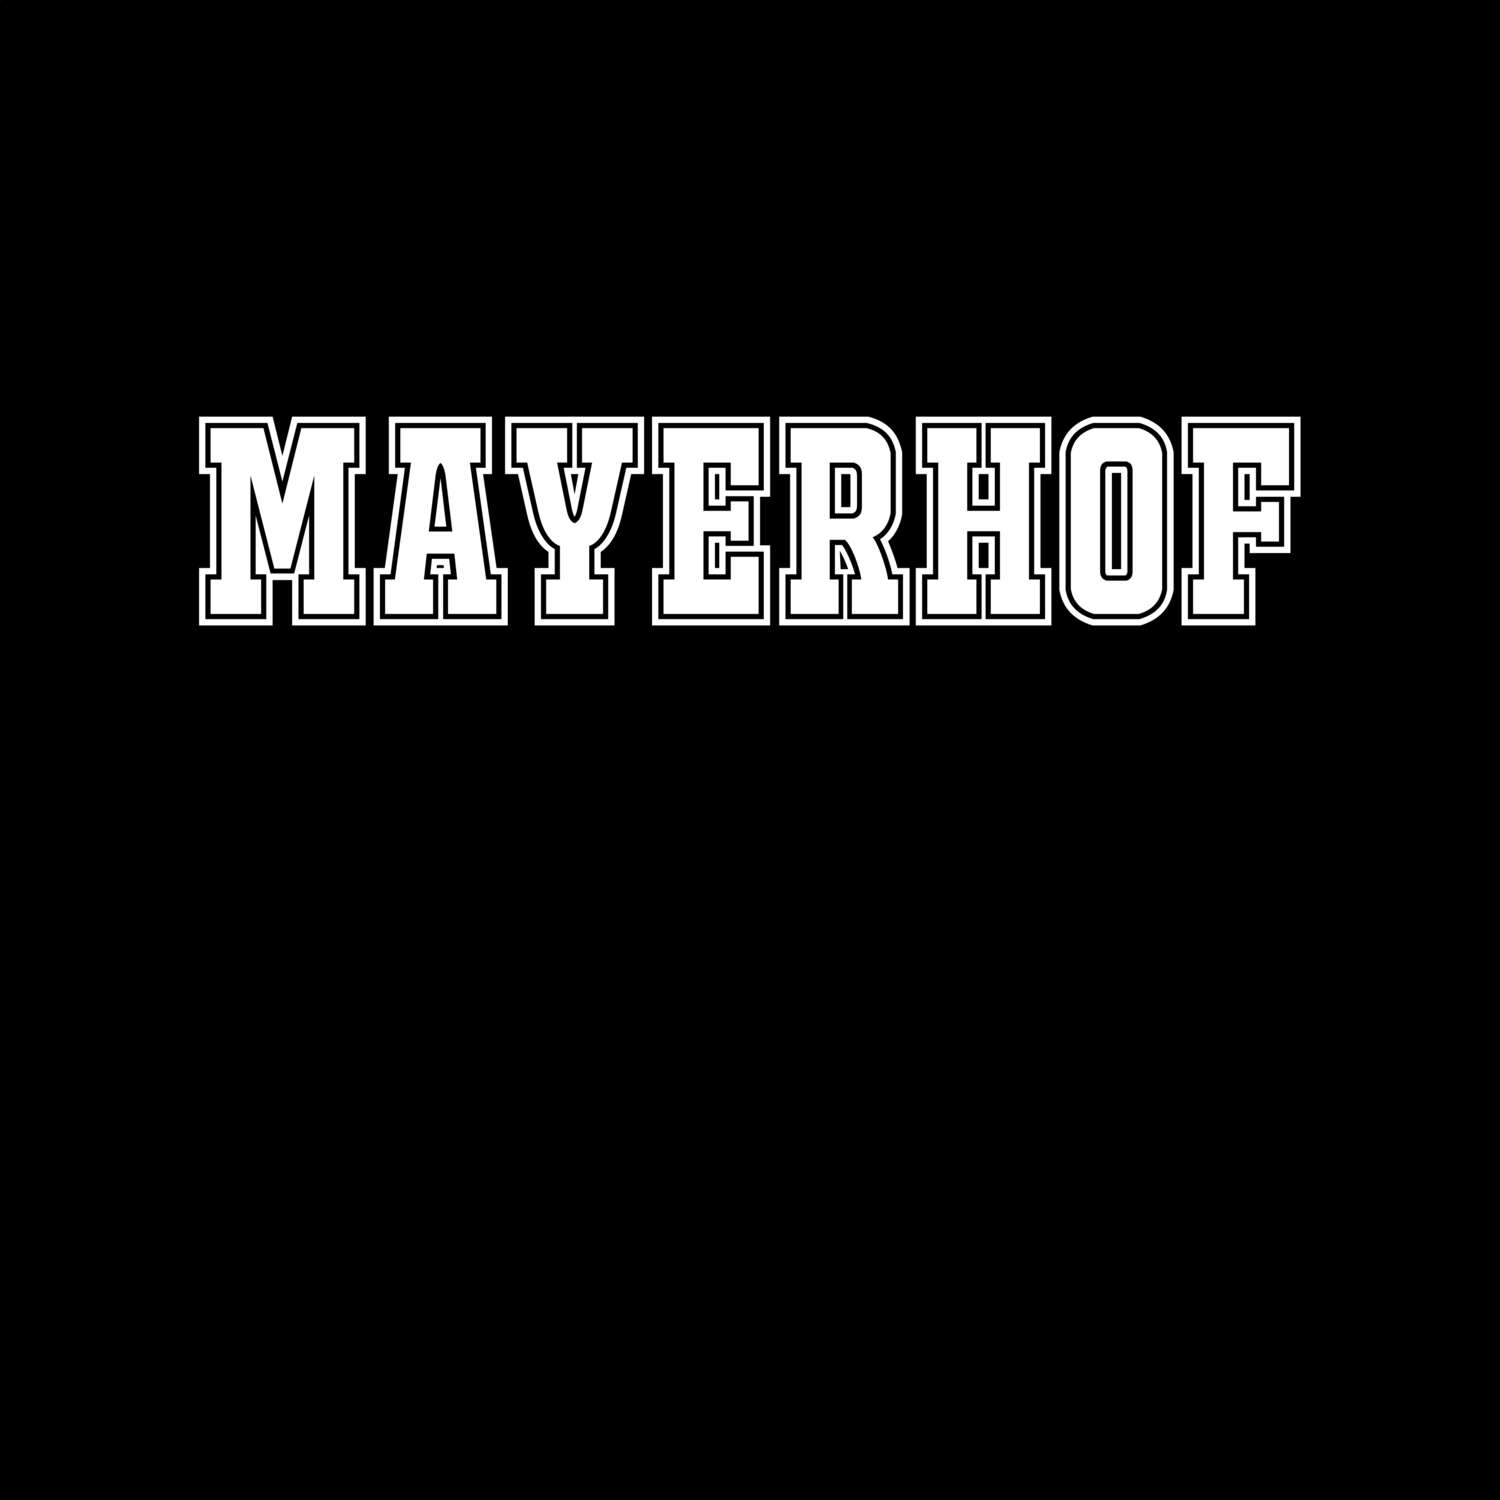 Mayerhof T-Shirt »Classic«